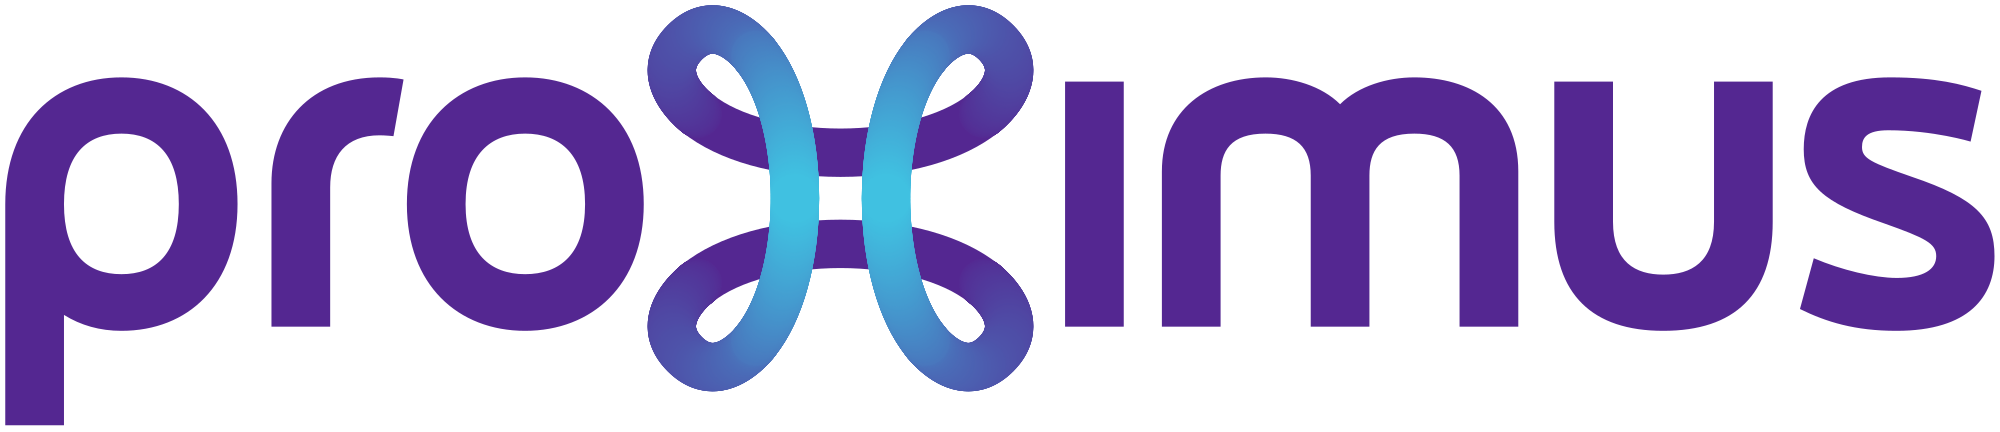 Proximus Brand Logo